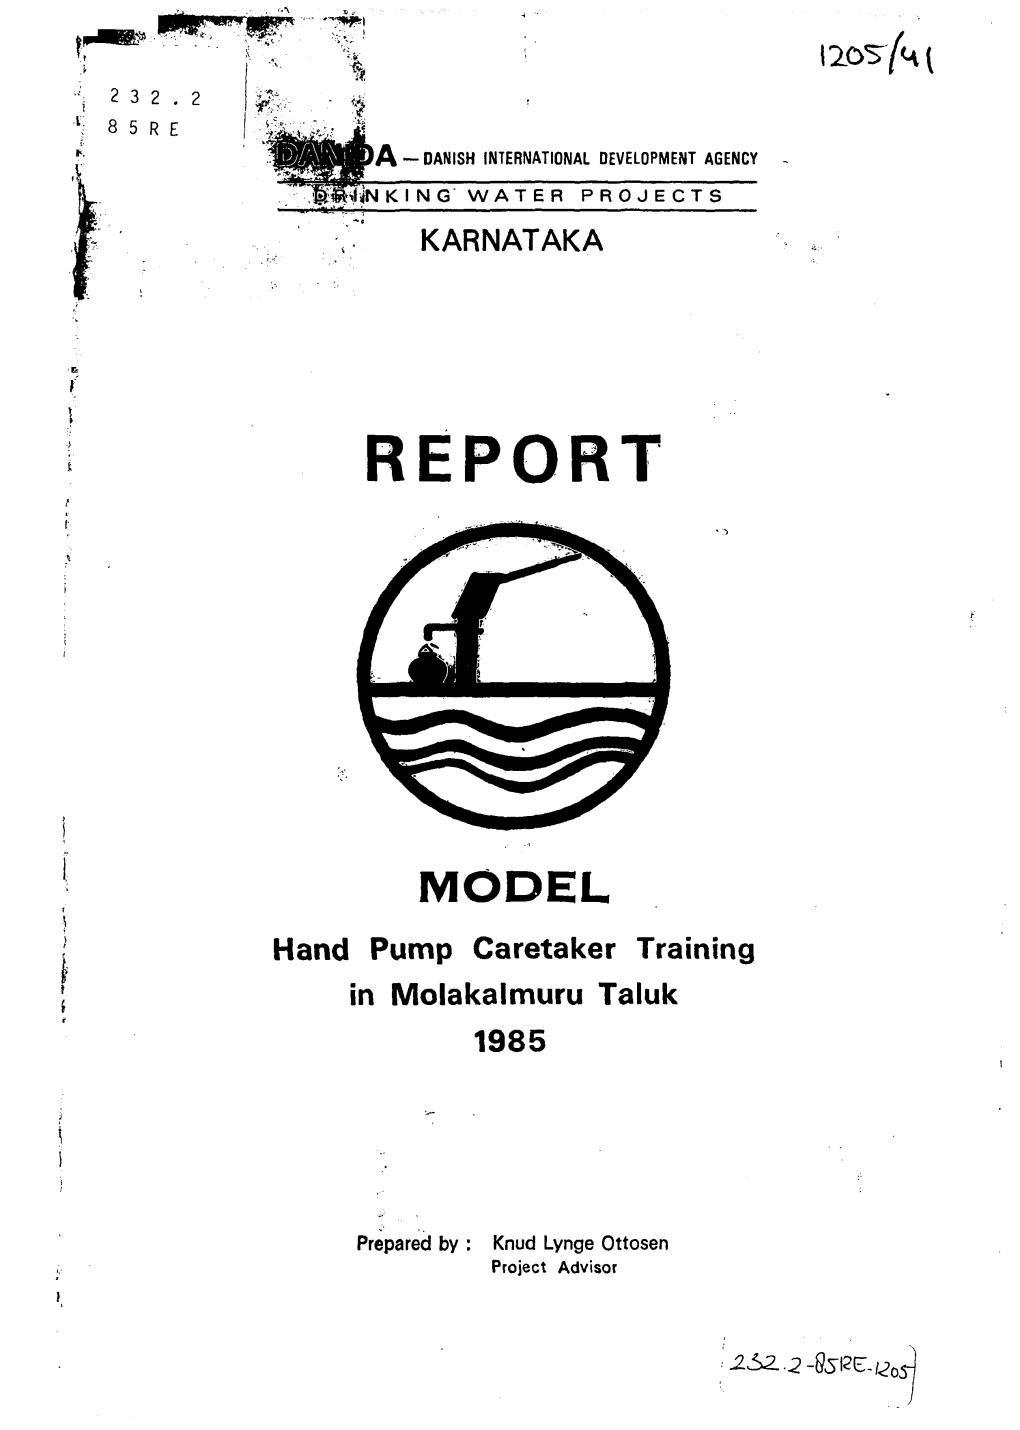 Report Model : Hand Pump Caretaker Training in Molakalmuru Taluk, 1985